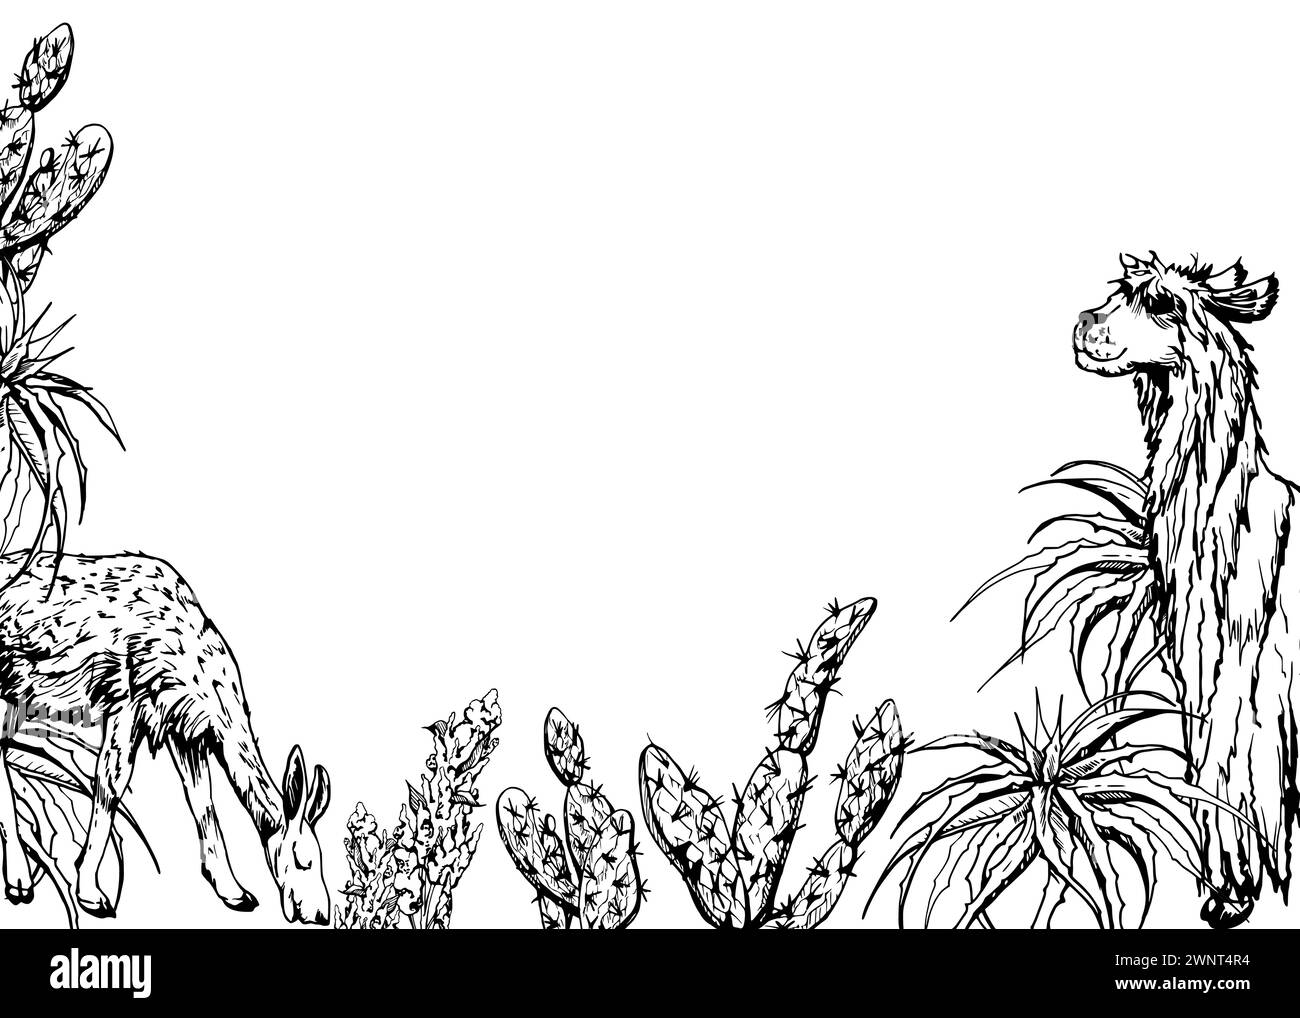 Hand drawn ink vector illustration, nature desert plant succulent cactus aloe agave, llama alpaca wool animals. Horizontal frame isolated on white Stock Vector